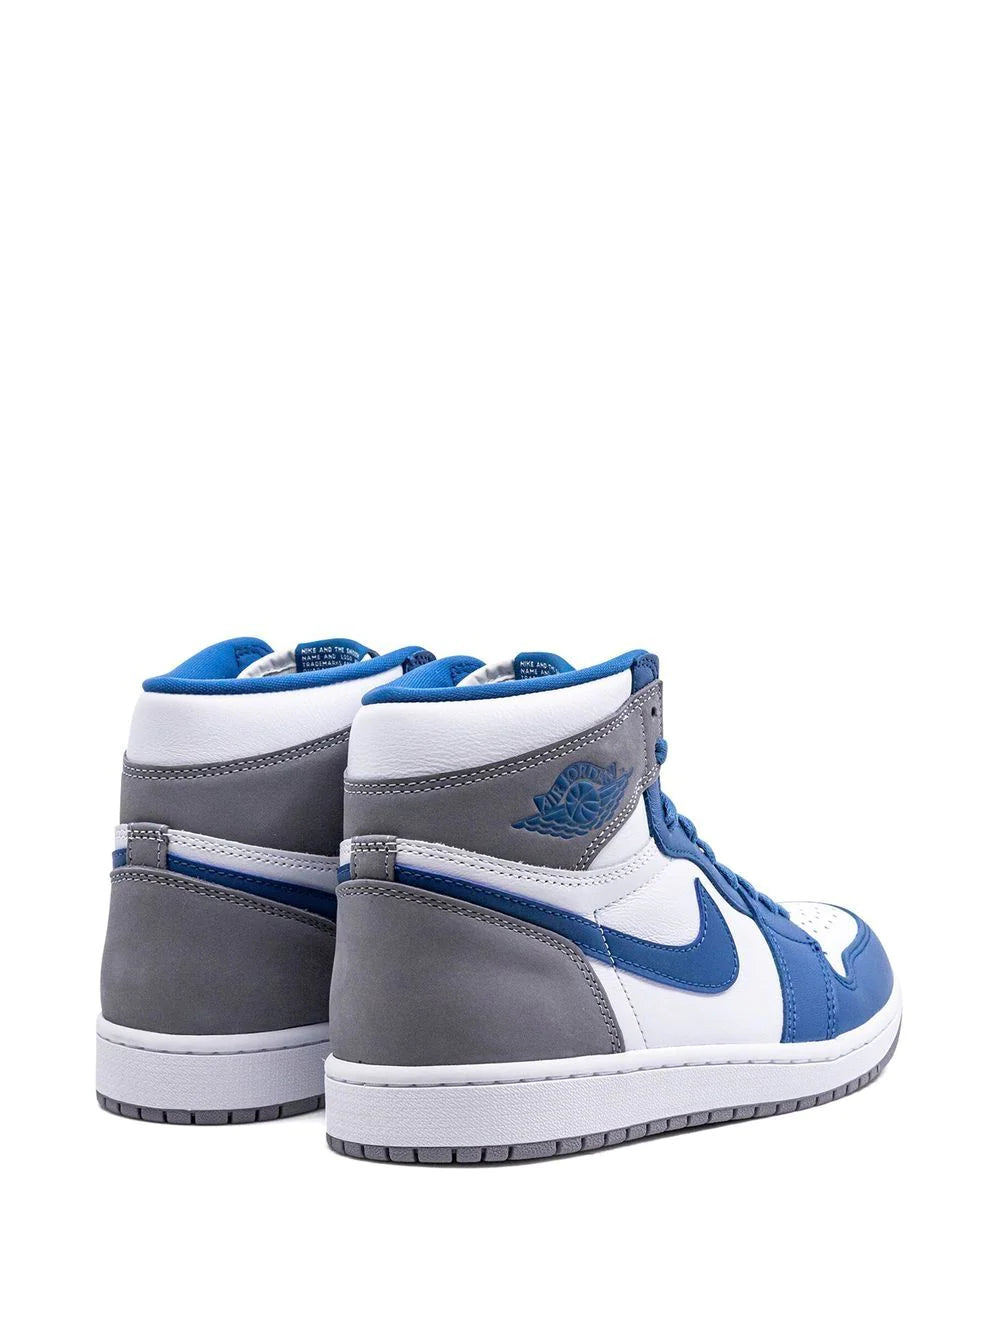 Jordan Air Jordan 1 High OG "True Blue" sneakers